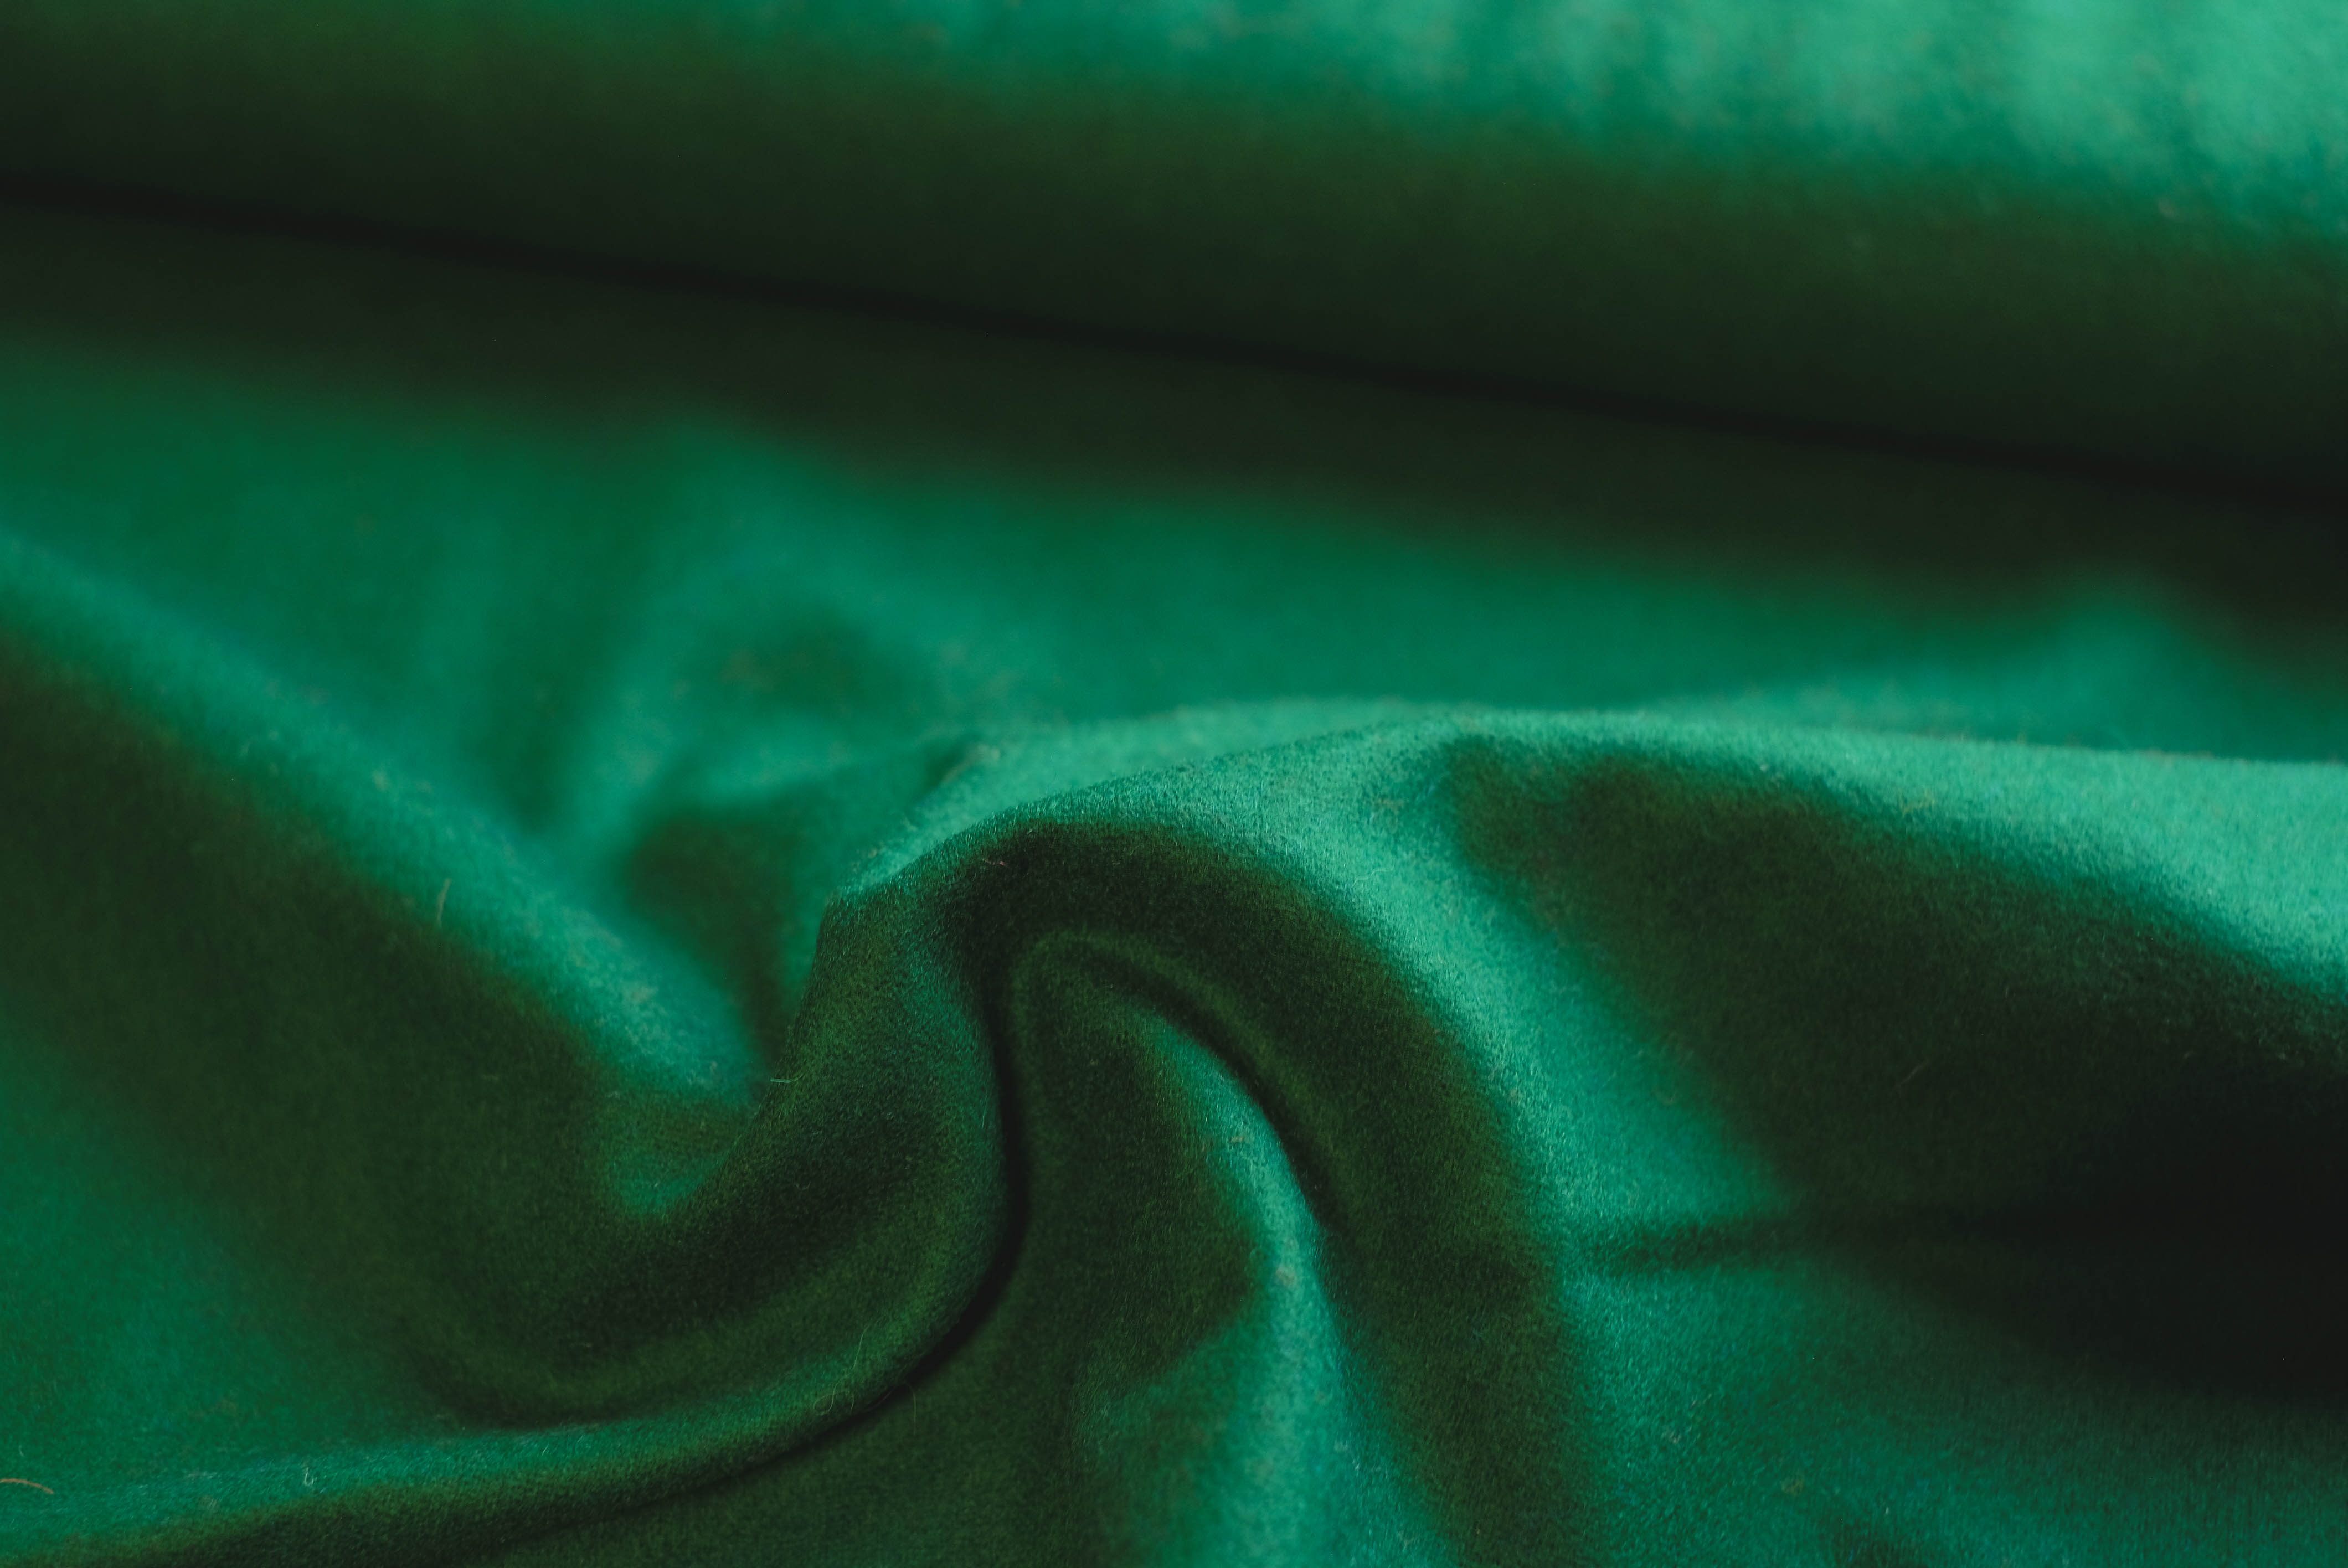 German THIN wool - emerald green 483